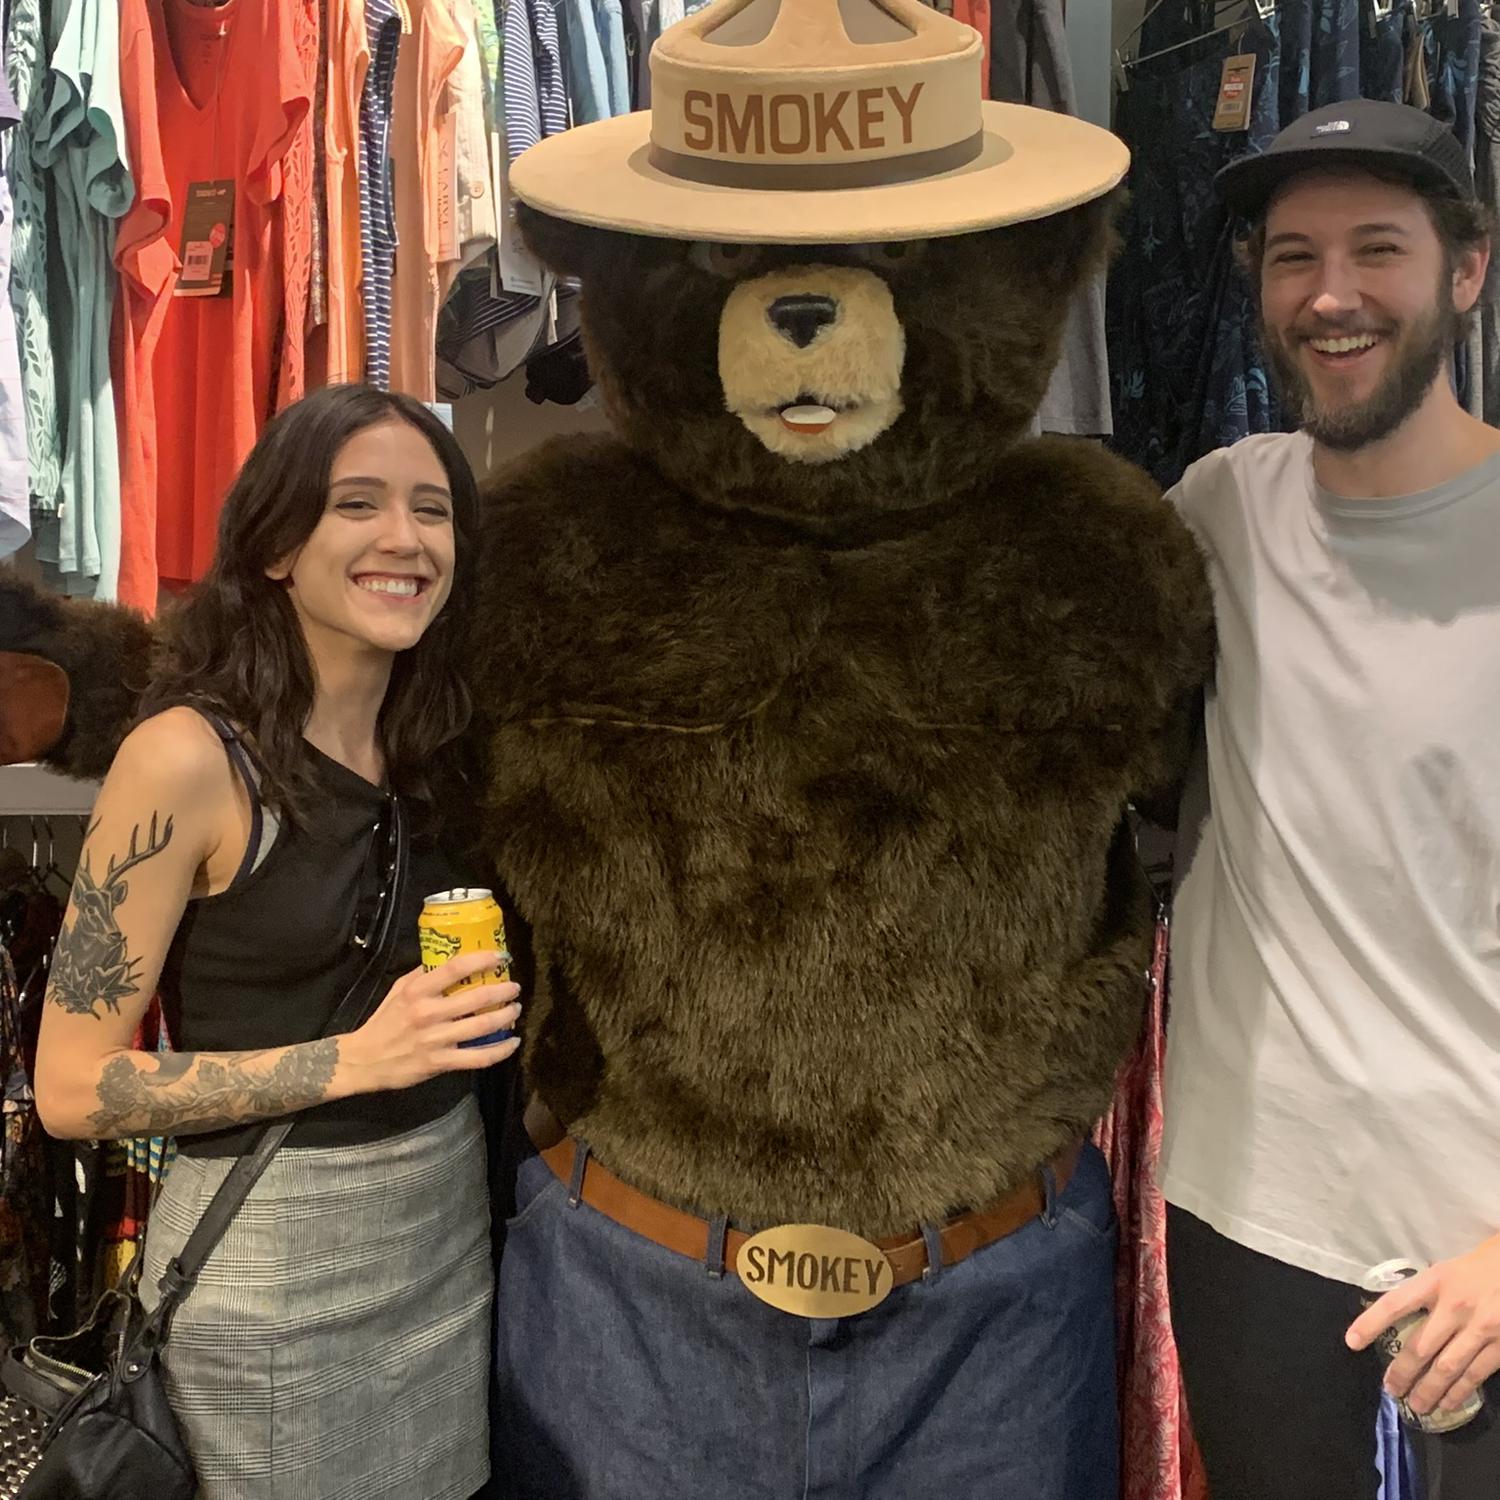 Smokey Bear, Flagstaff, AZ
August 2019